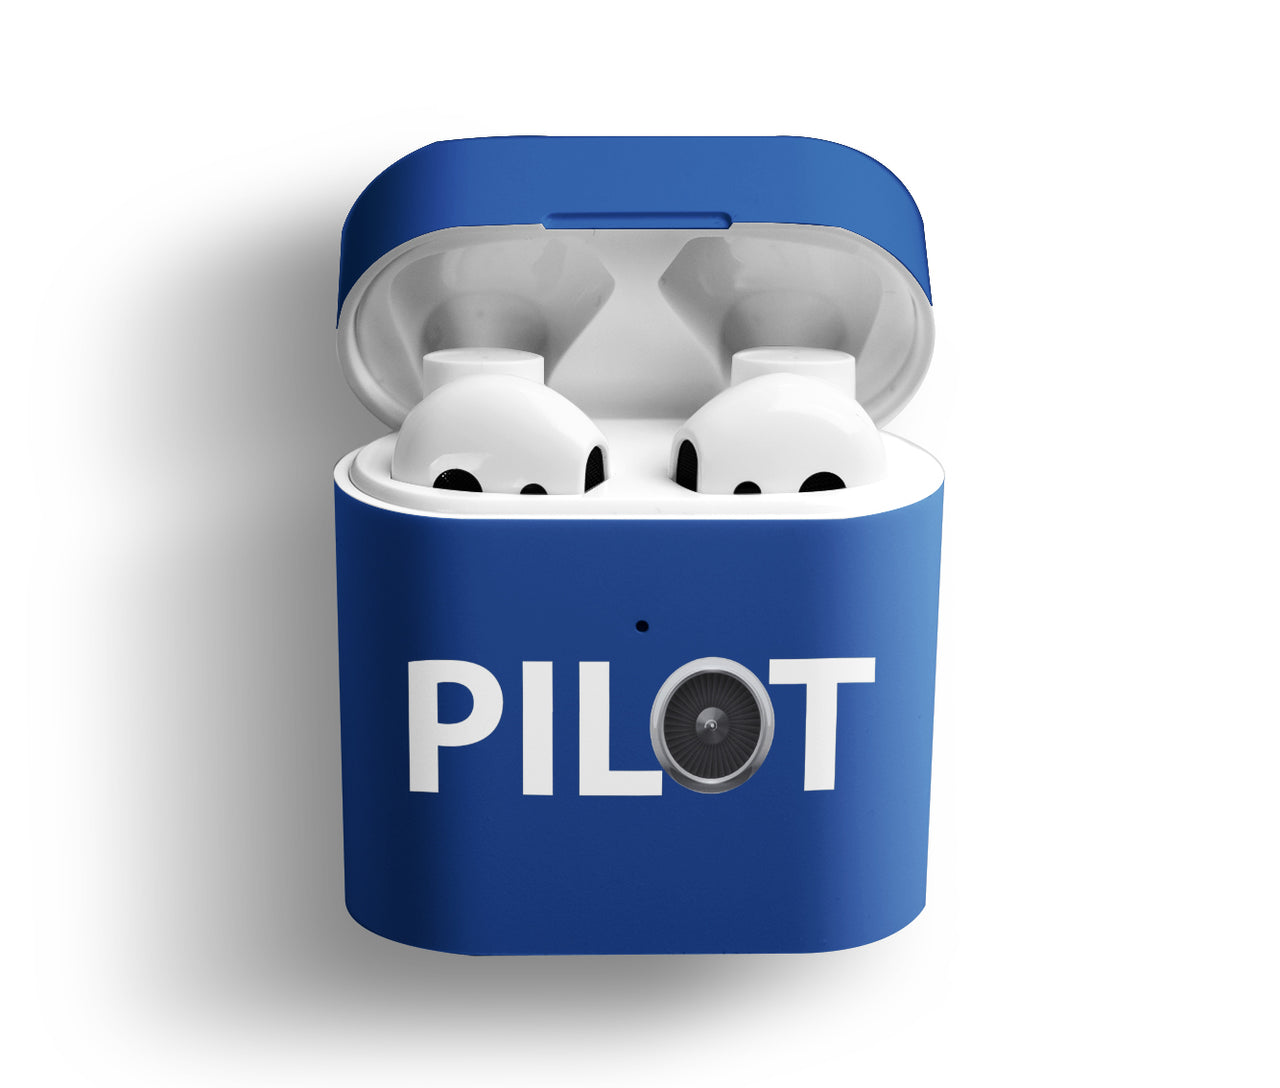 Pilot & Jet Engine Designed AirPods Cases